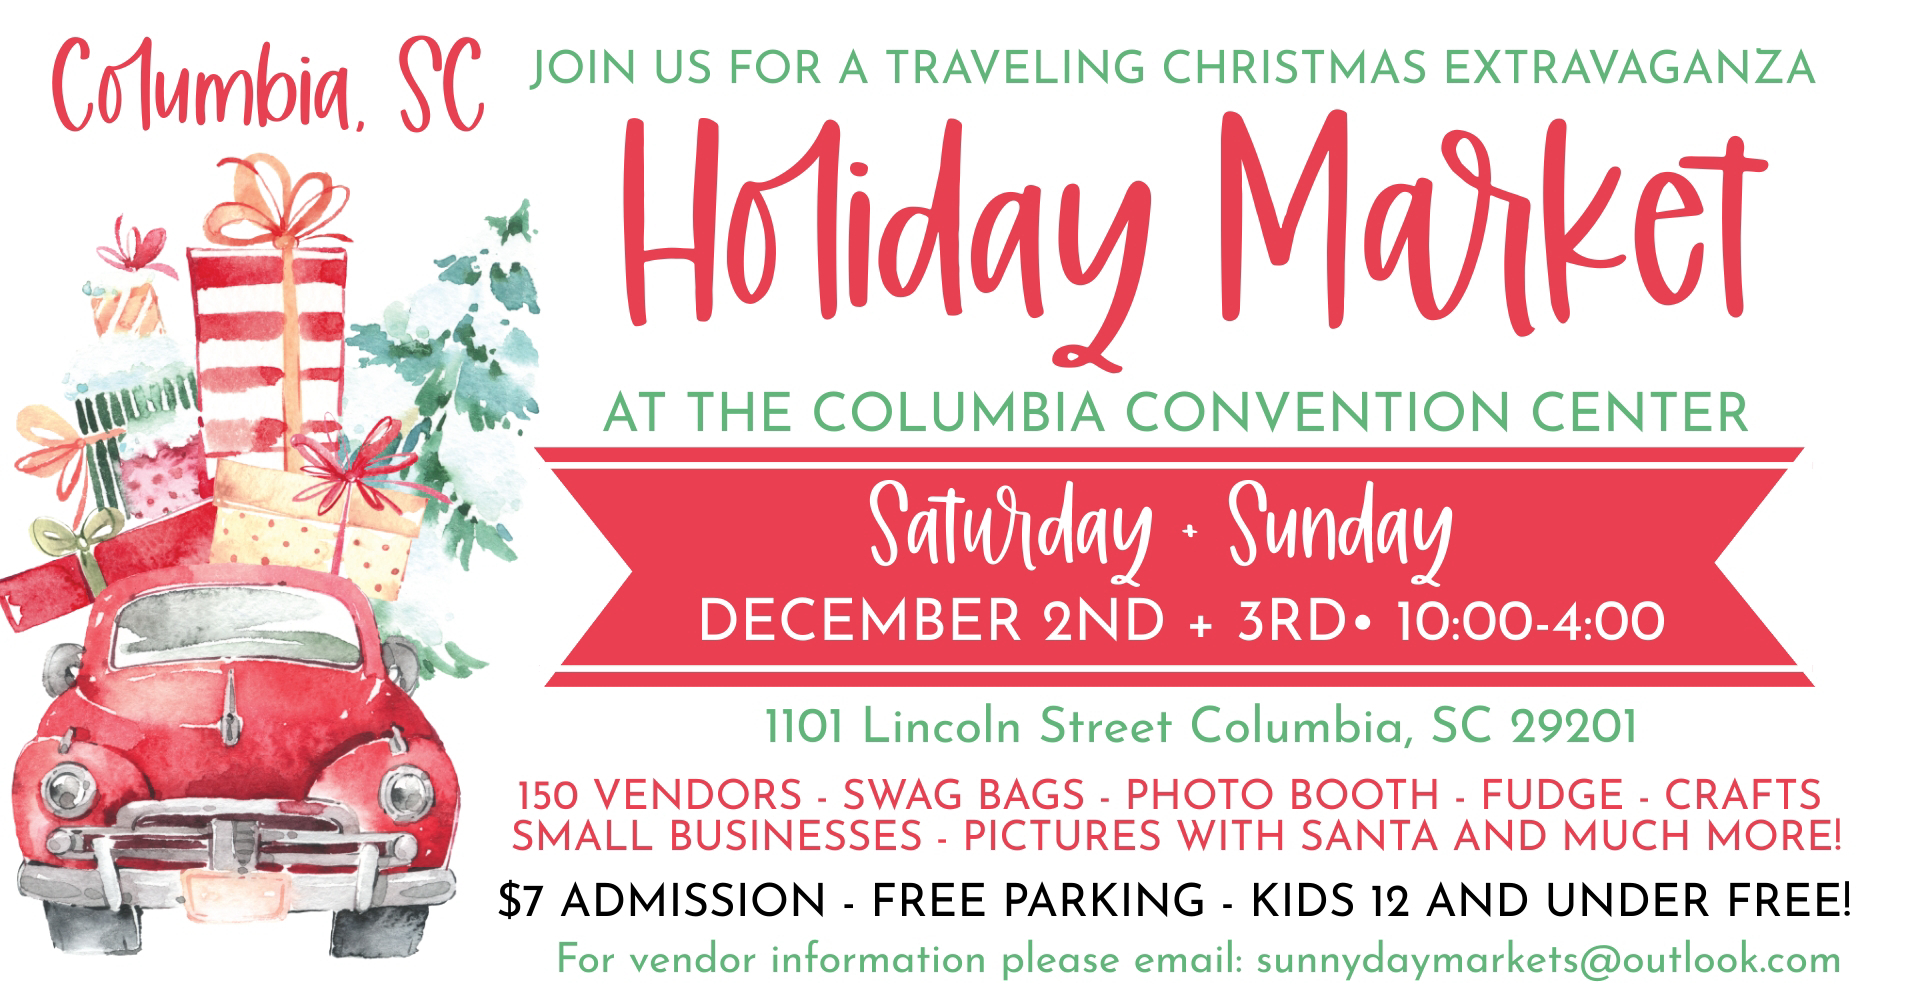 Columbia Christmas Extravaganza Holiday Market